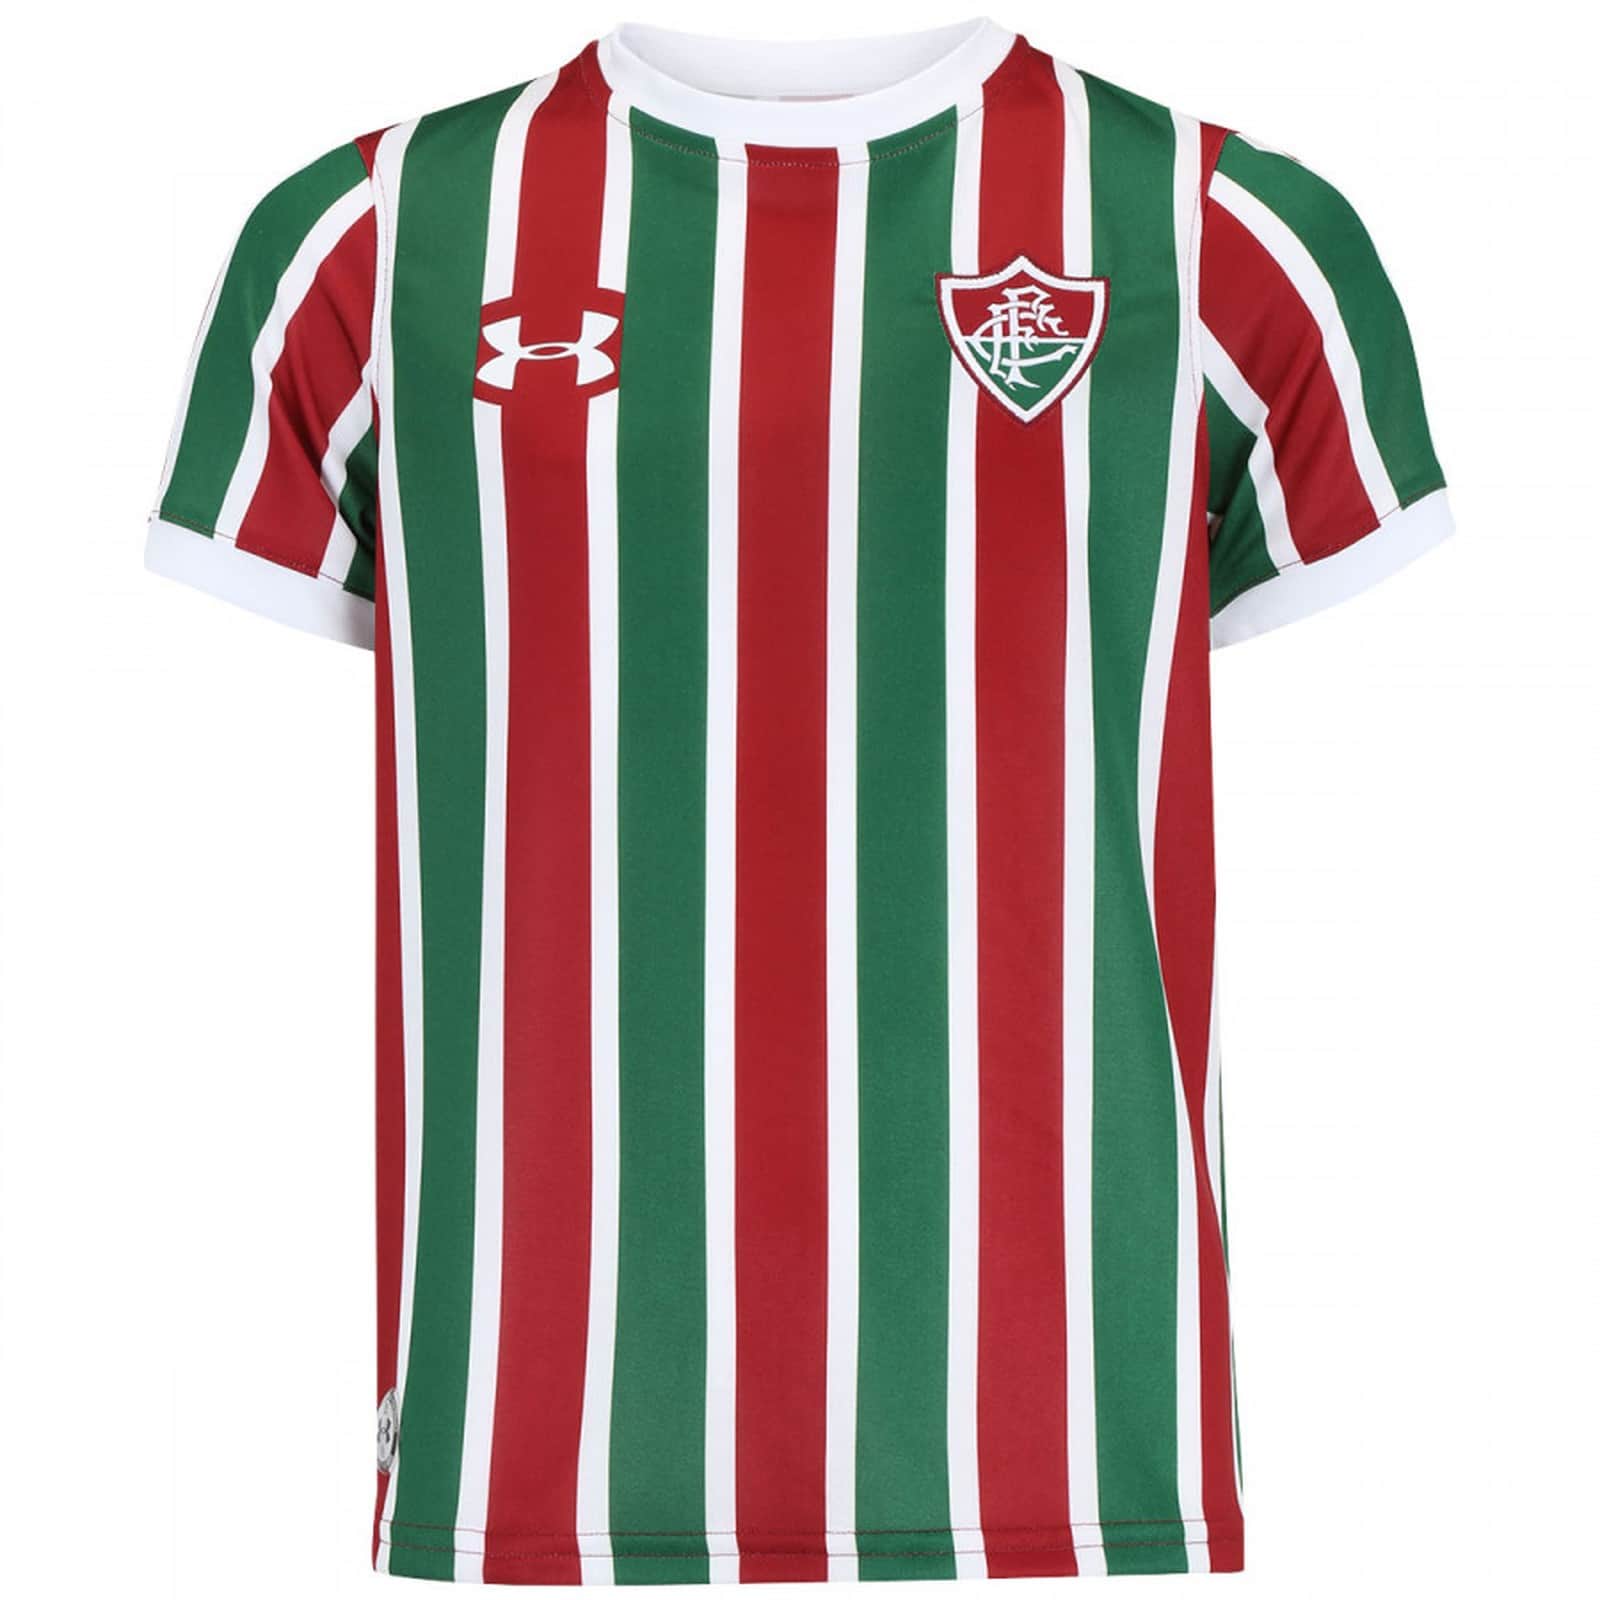 Site vendas vaza novo modelo infantil da camisa do Fluminense - Lance!